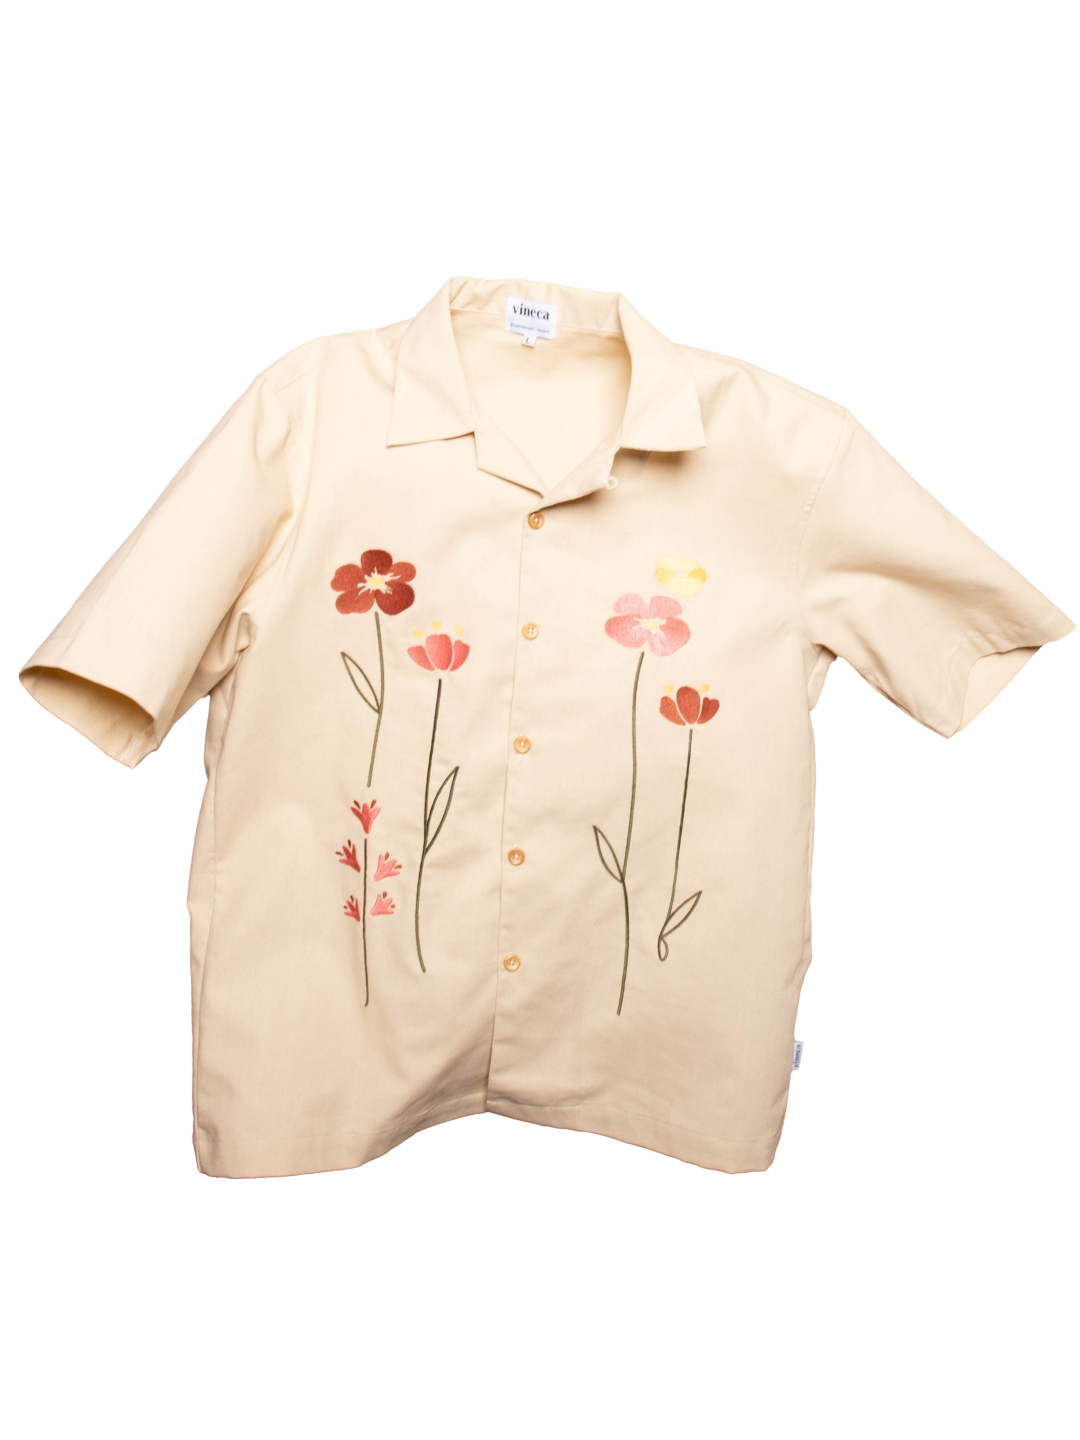 Vineca La Fleur Shirt (Multicolor)